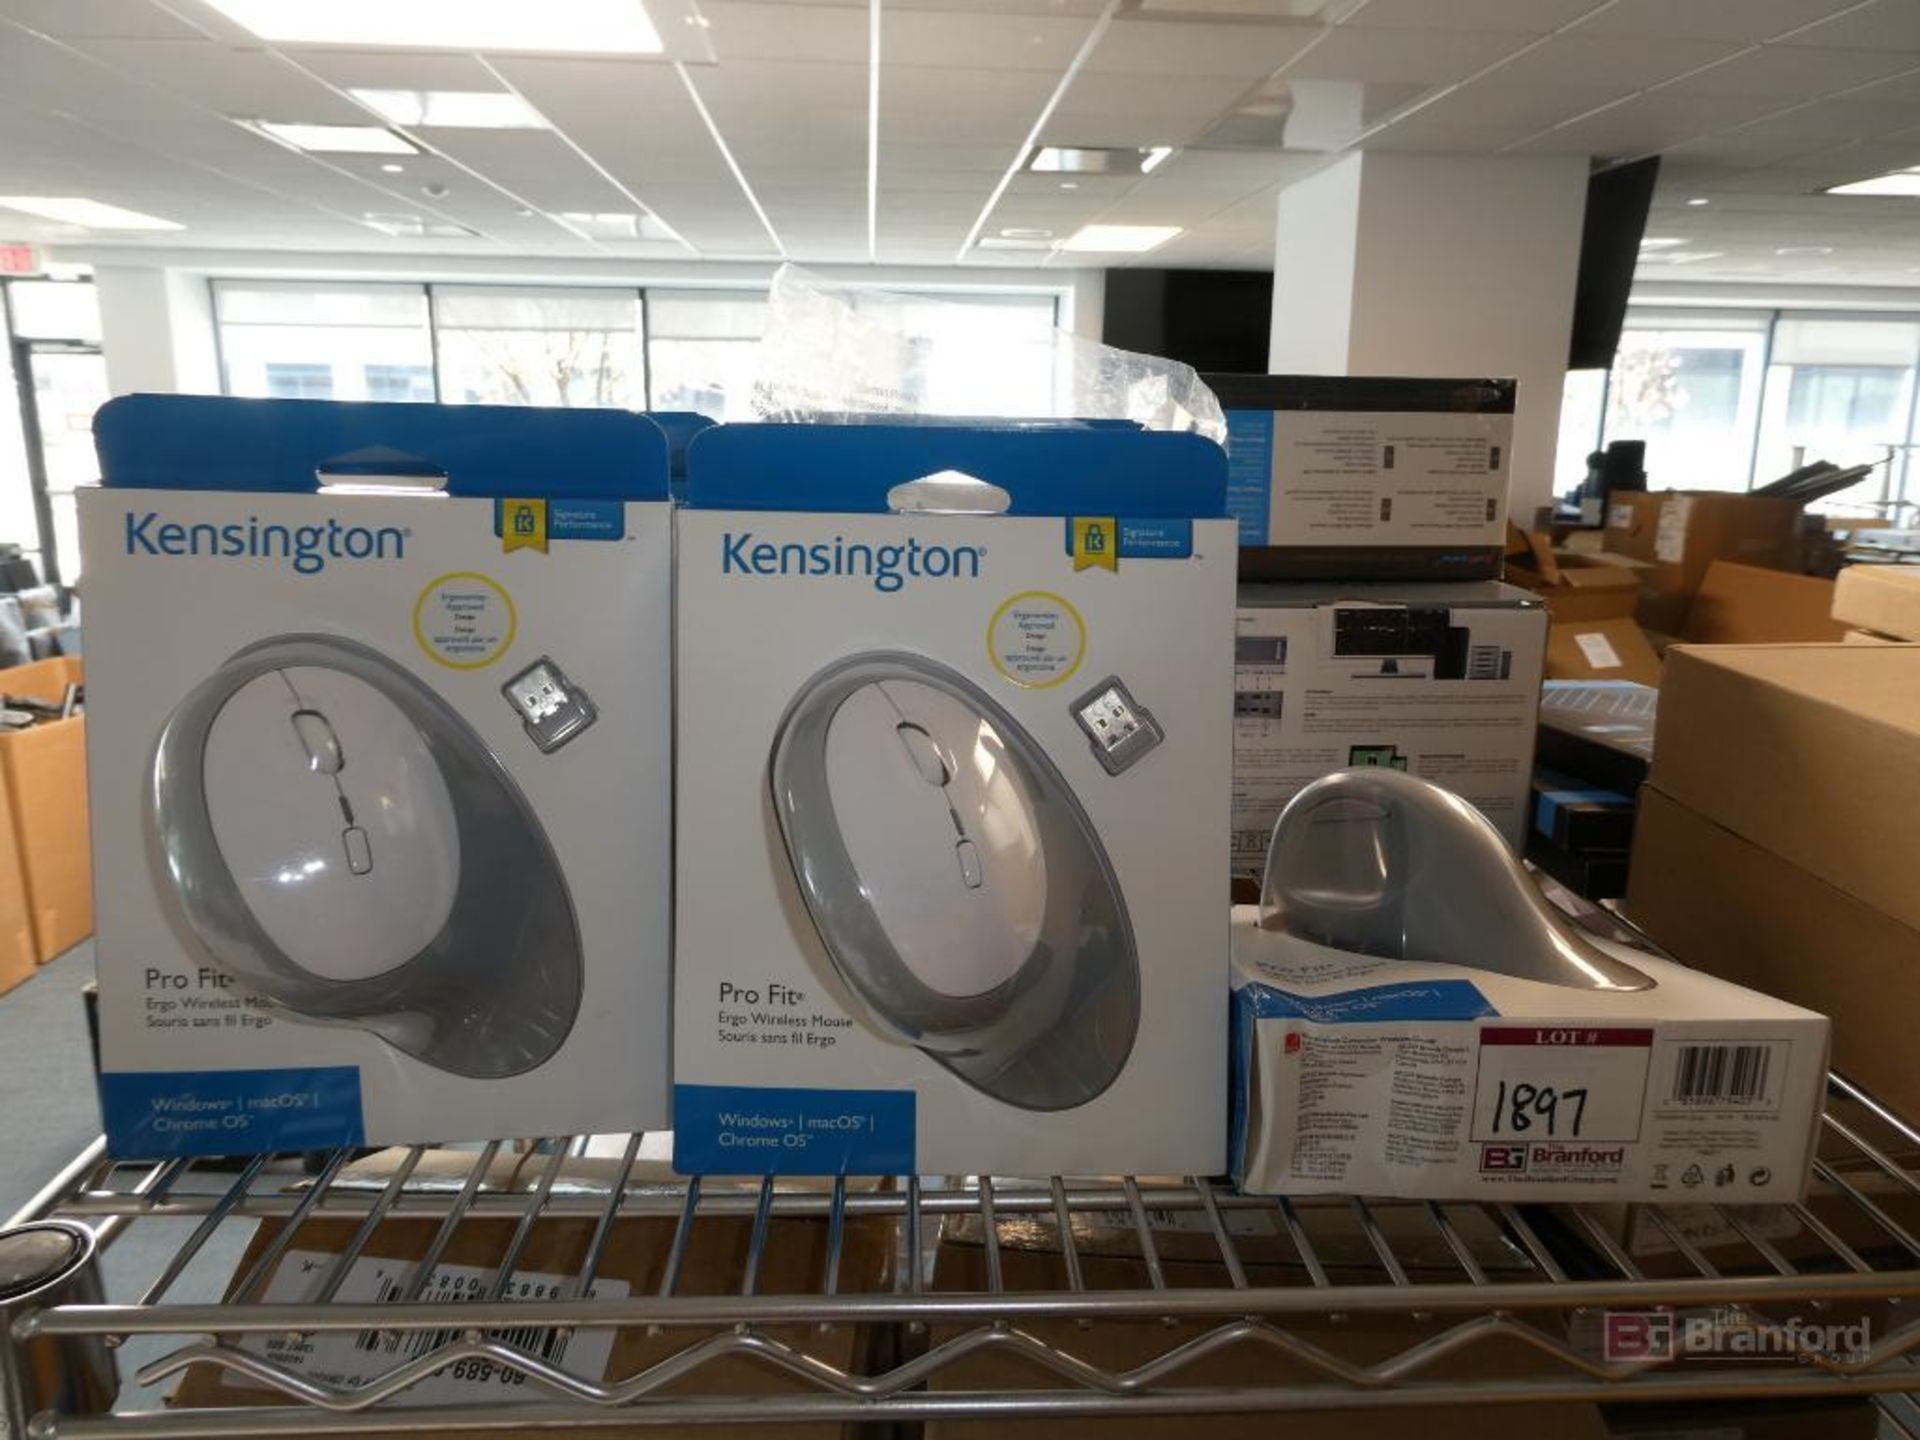 (5) Kensington Pro Fit, Ergo Wireless Mice (New)